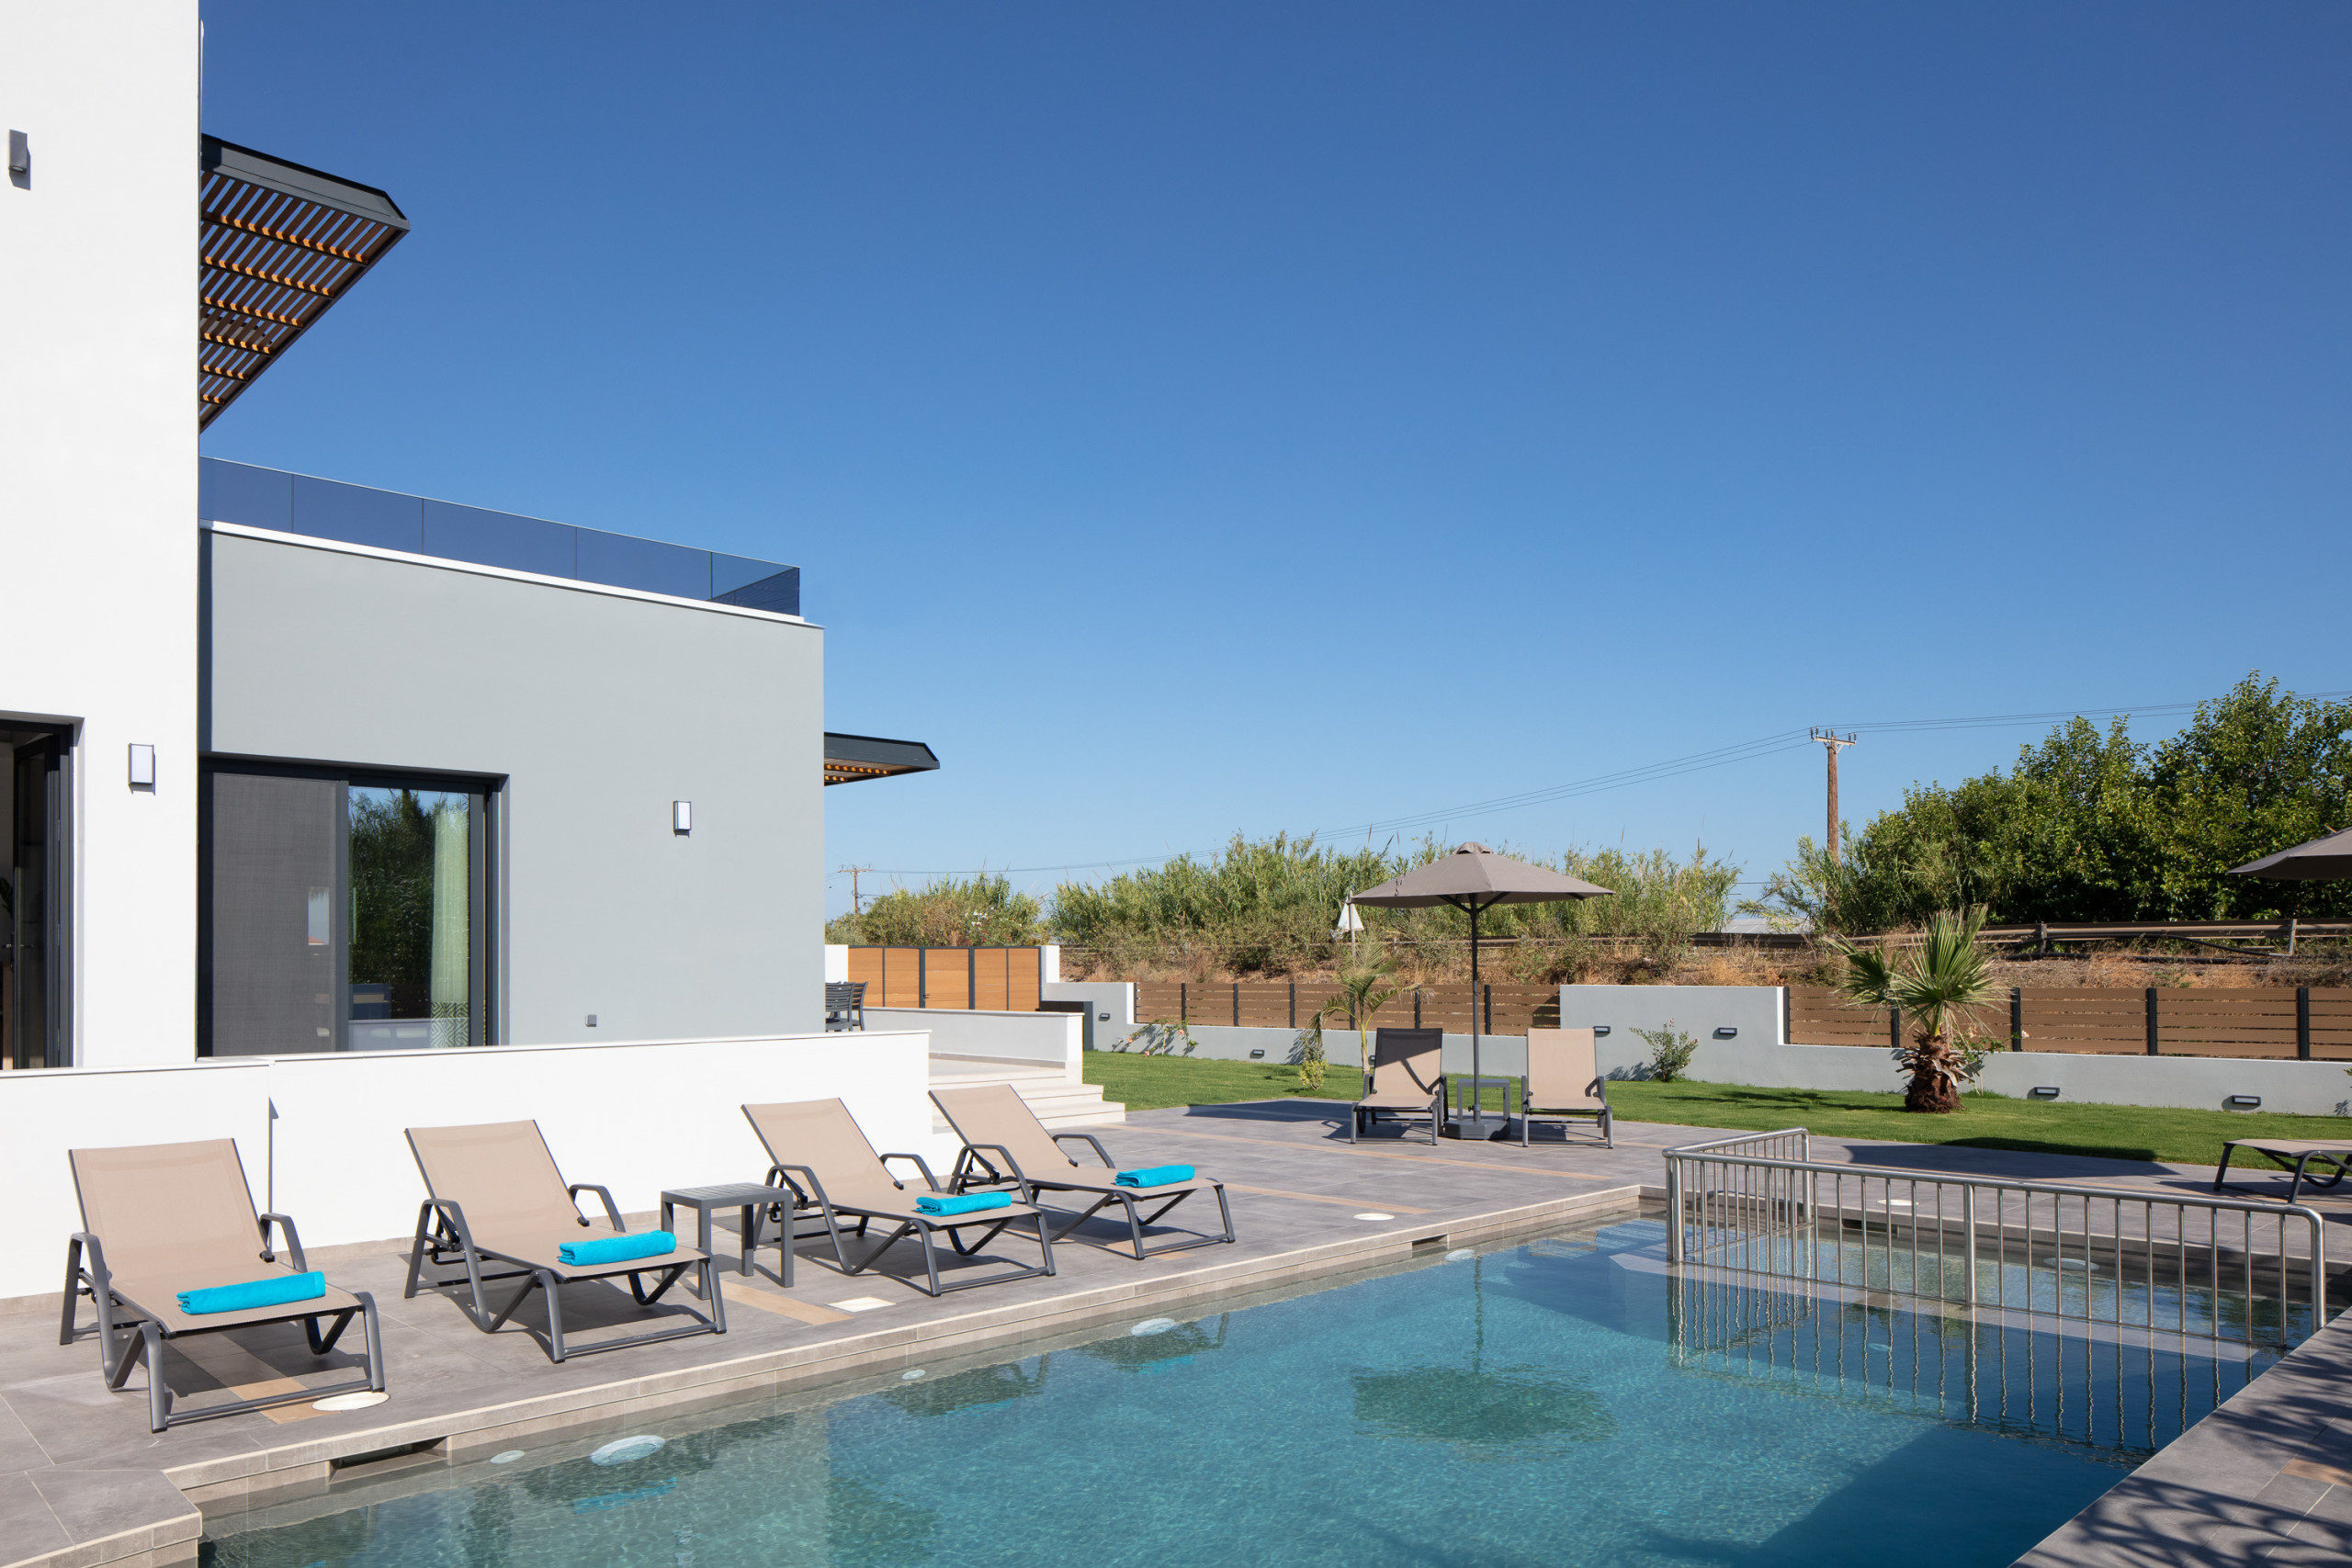 Sunnyside villa II, ideal for vibrant stays